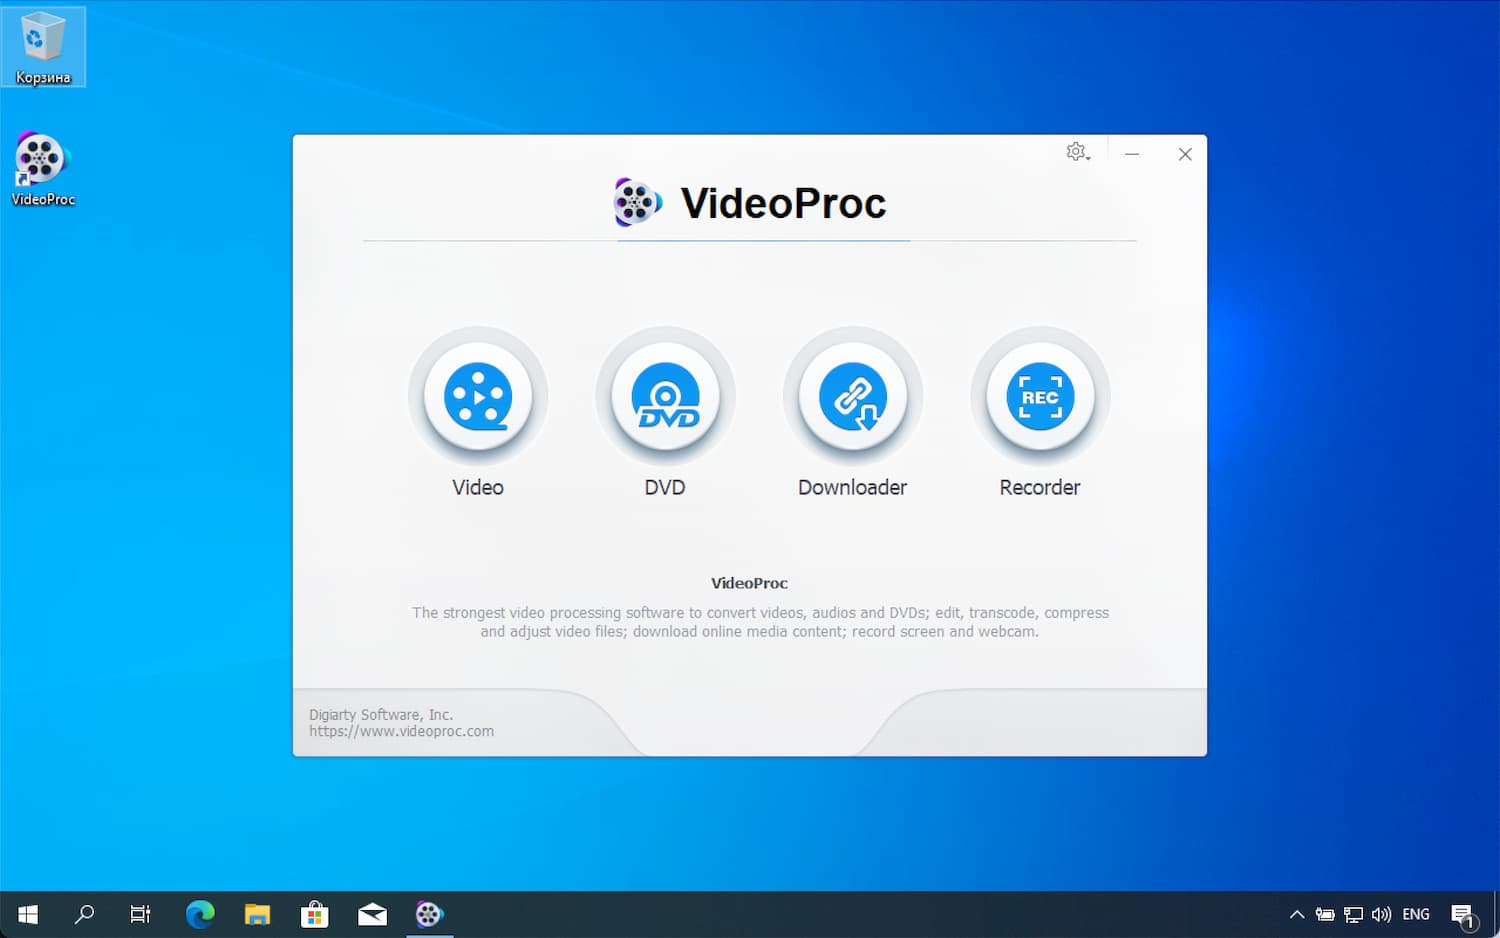 videoproc is free